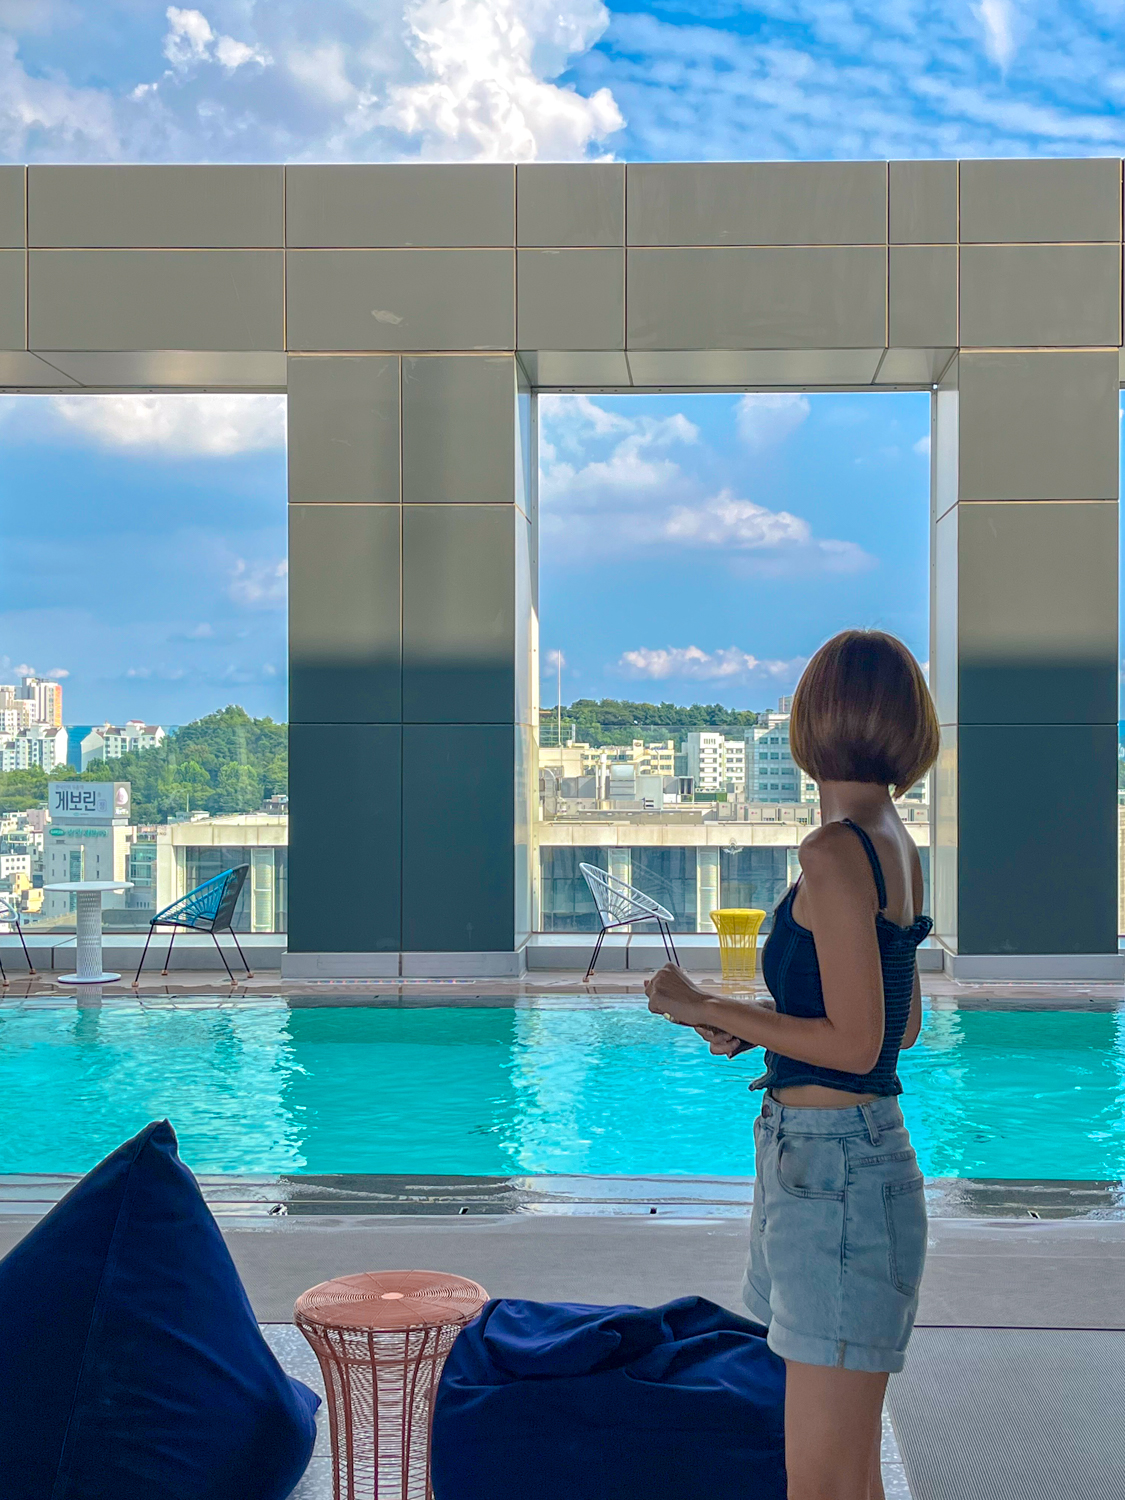 L7 홍대 호텔 22층 루프탑 수영장에 서있는 여자